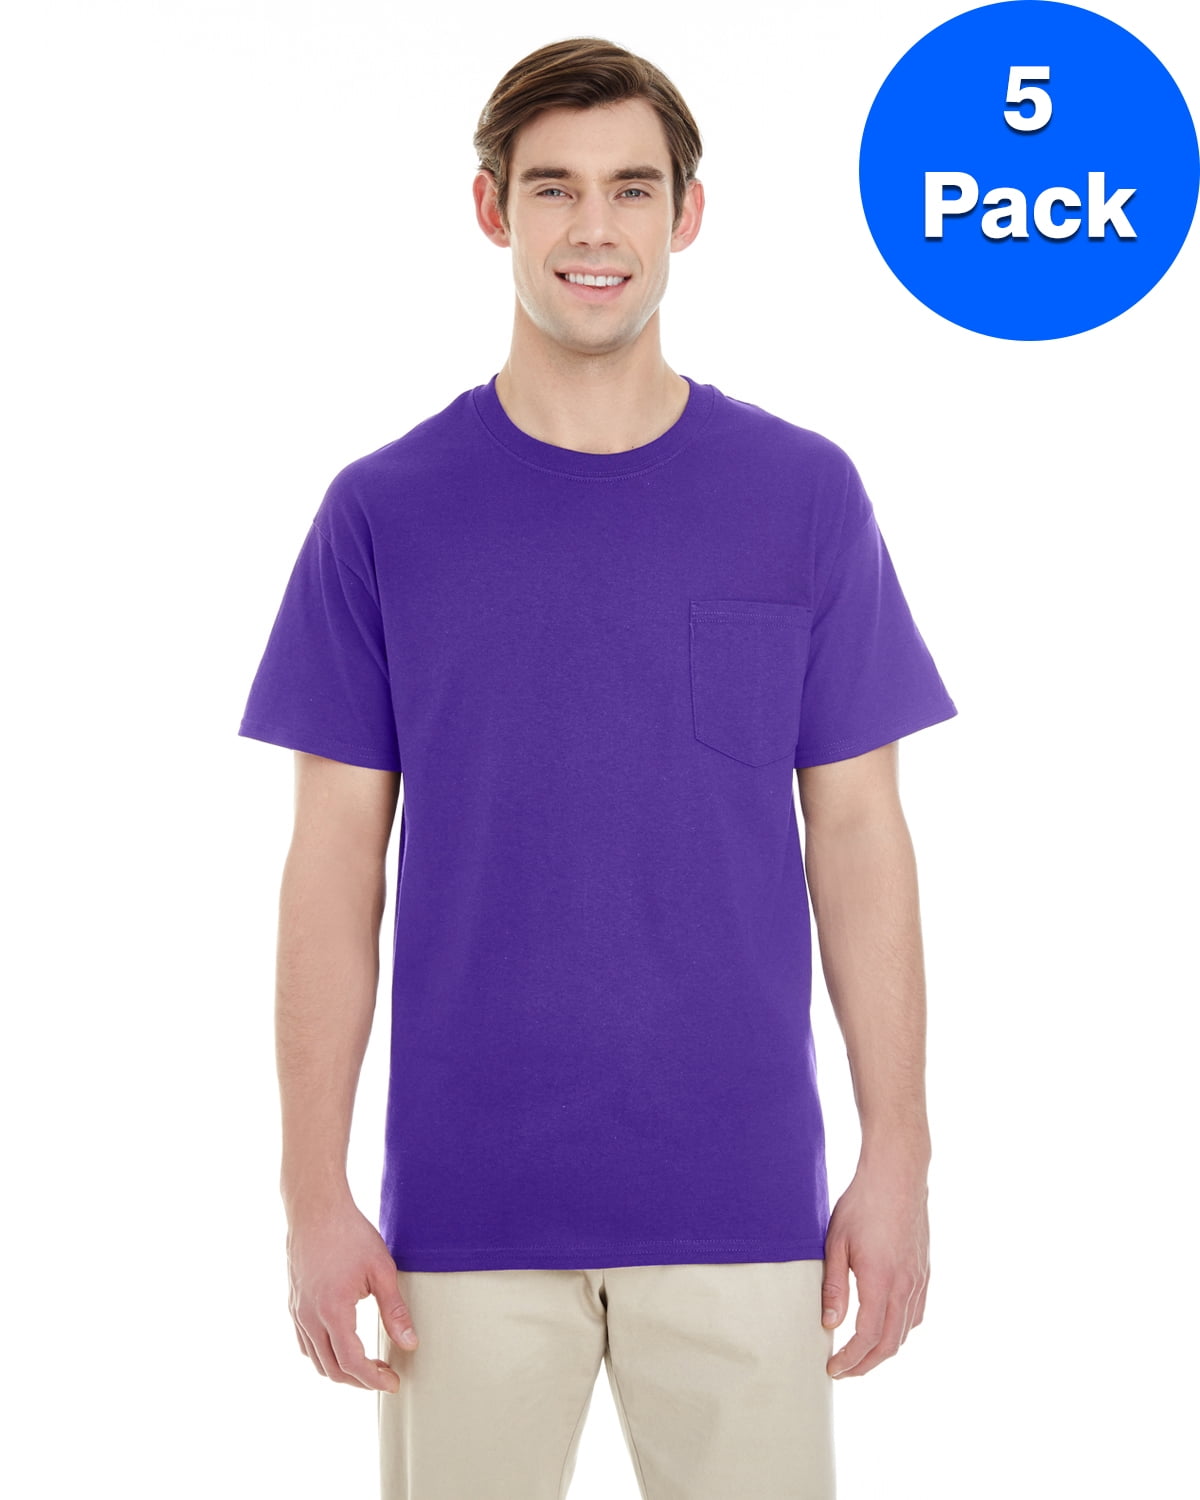 Mens Heavy Cotton T-Shirt with a Pocket 5 Pack - Walmart.com